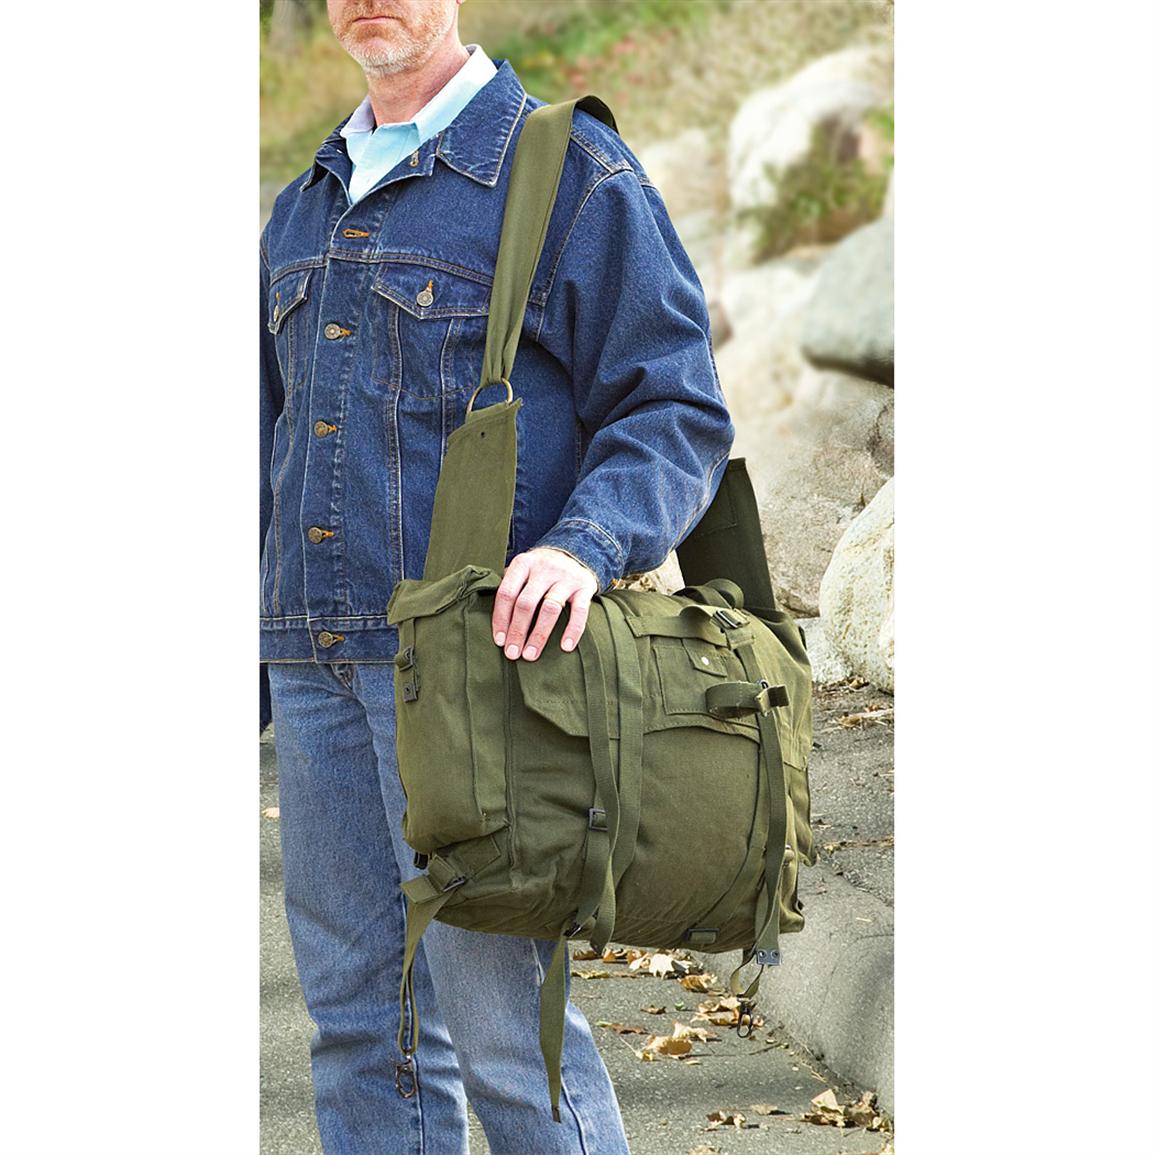 Mens Army Combat Military Travel Shoulder Messenger Satchel Pouch Zip Bag Green Black Or DPM Camo